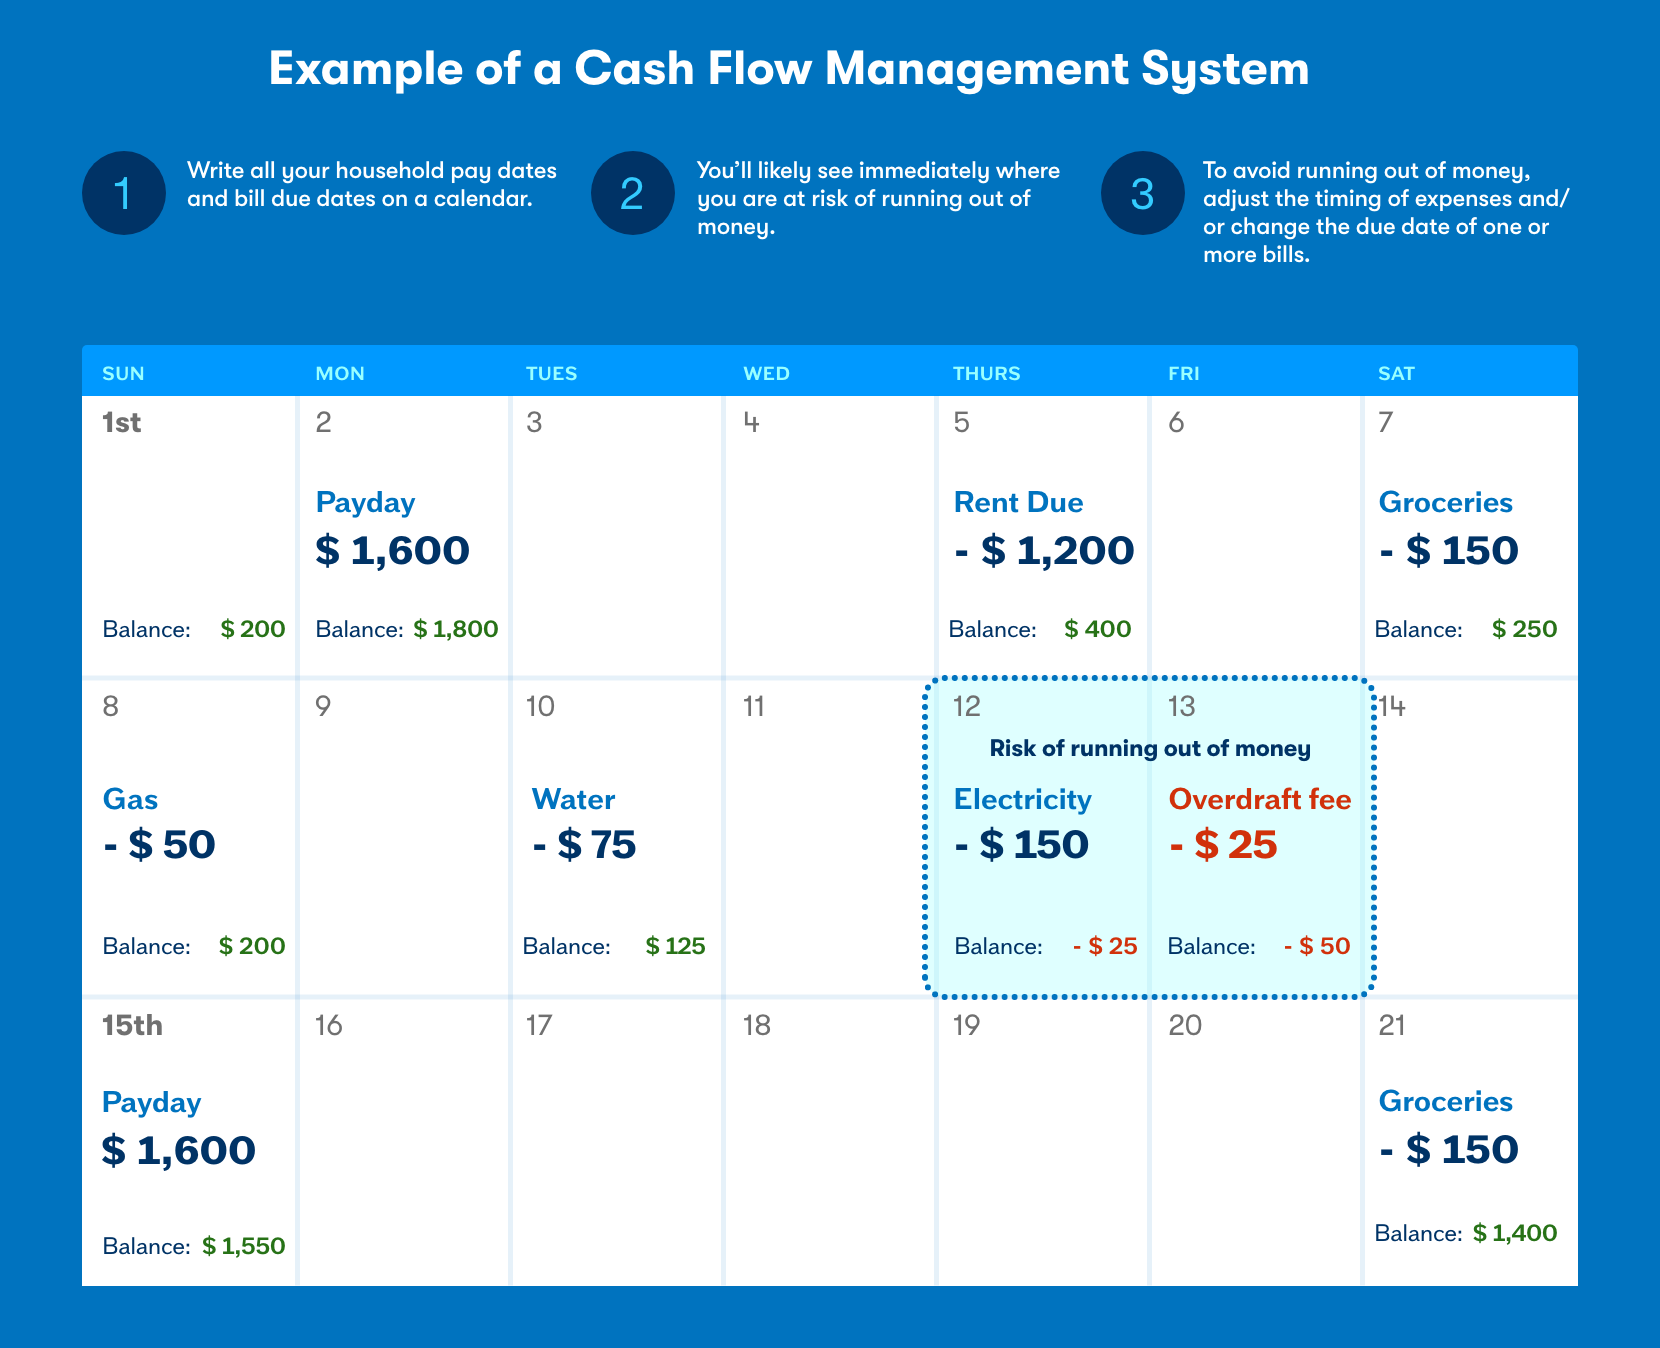 Cashflow management example in a calendar format